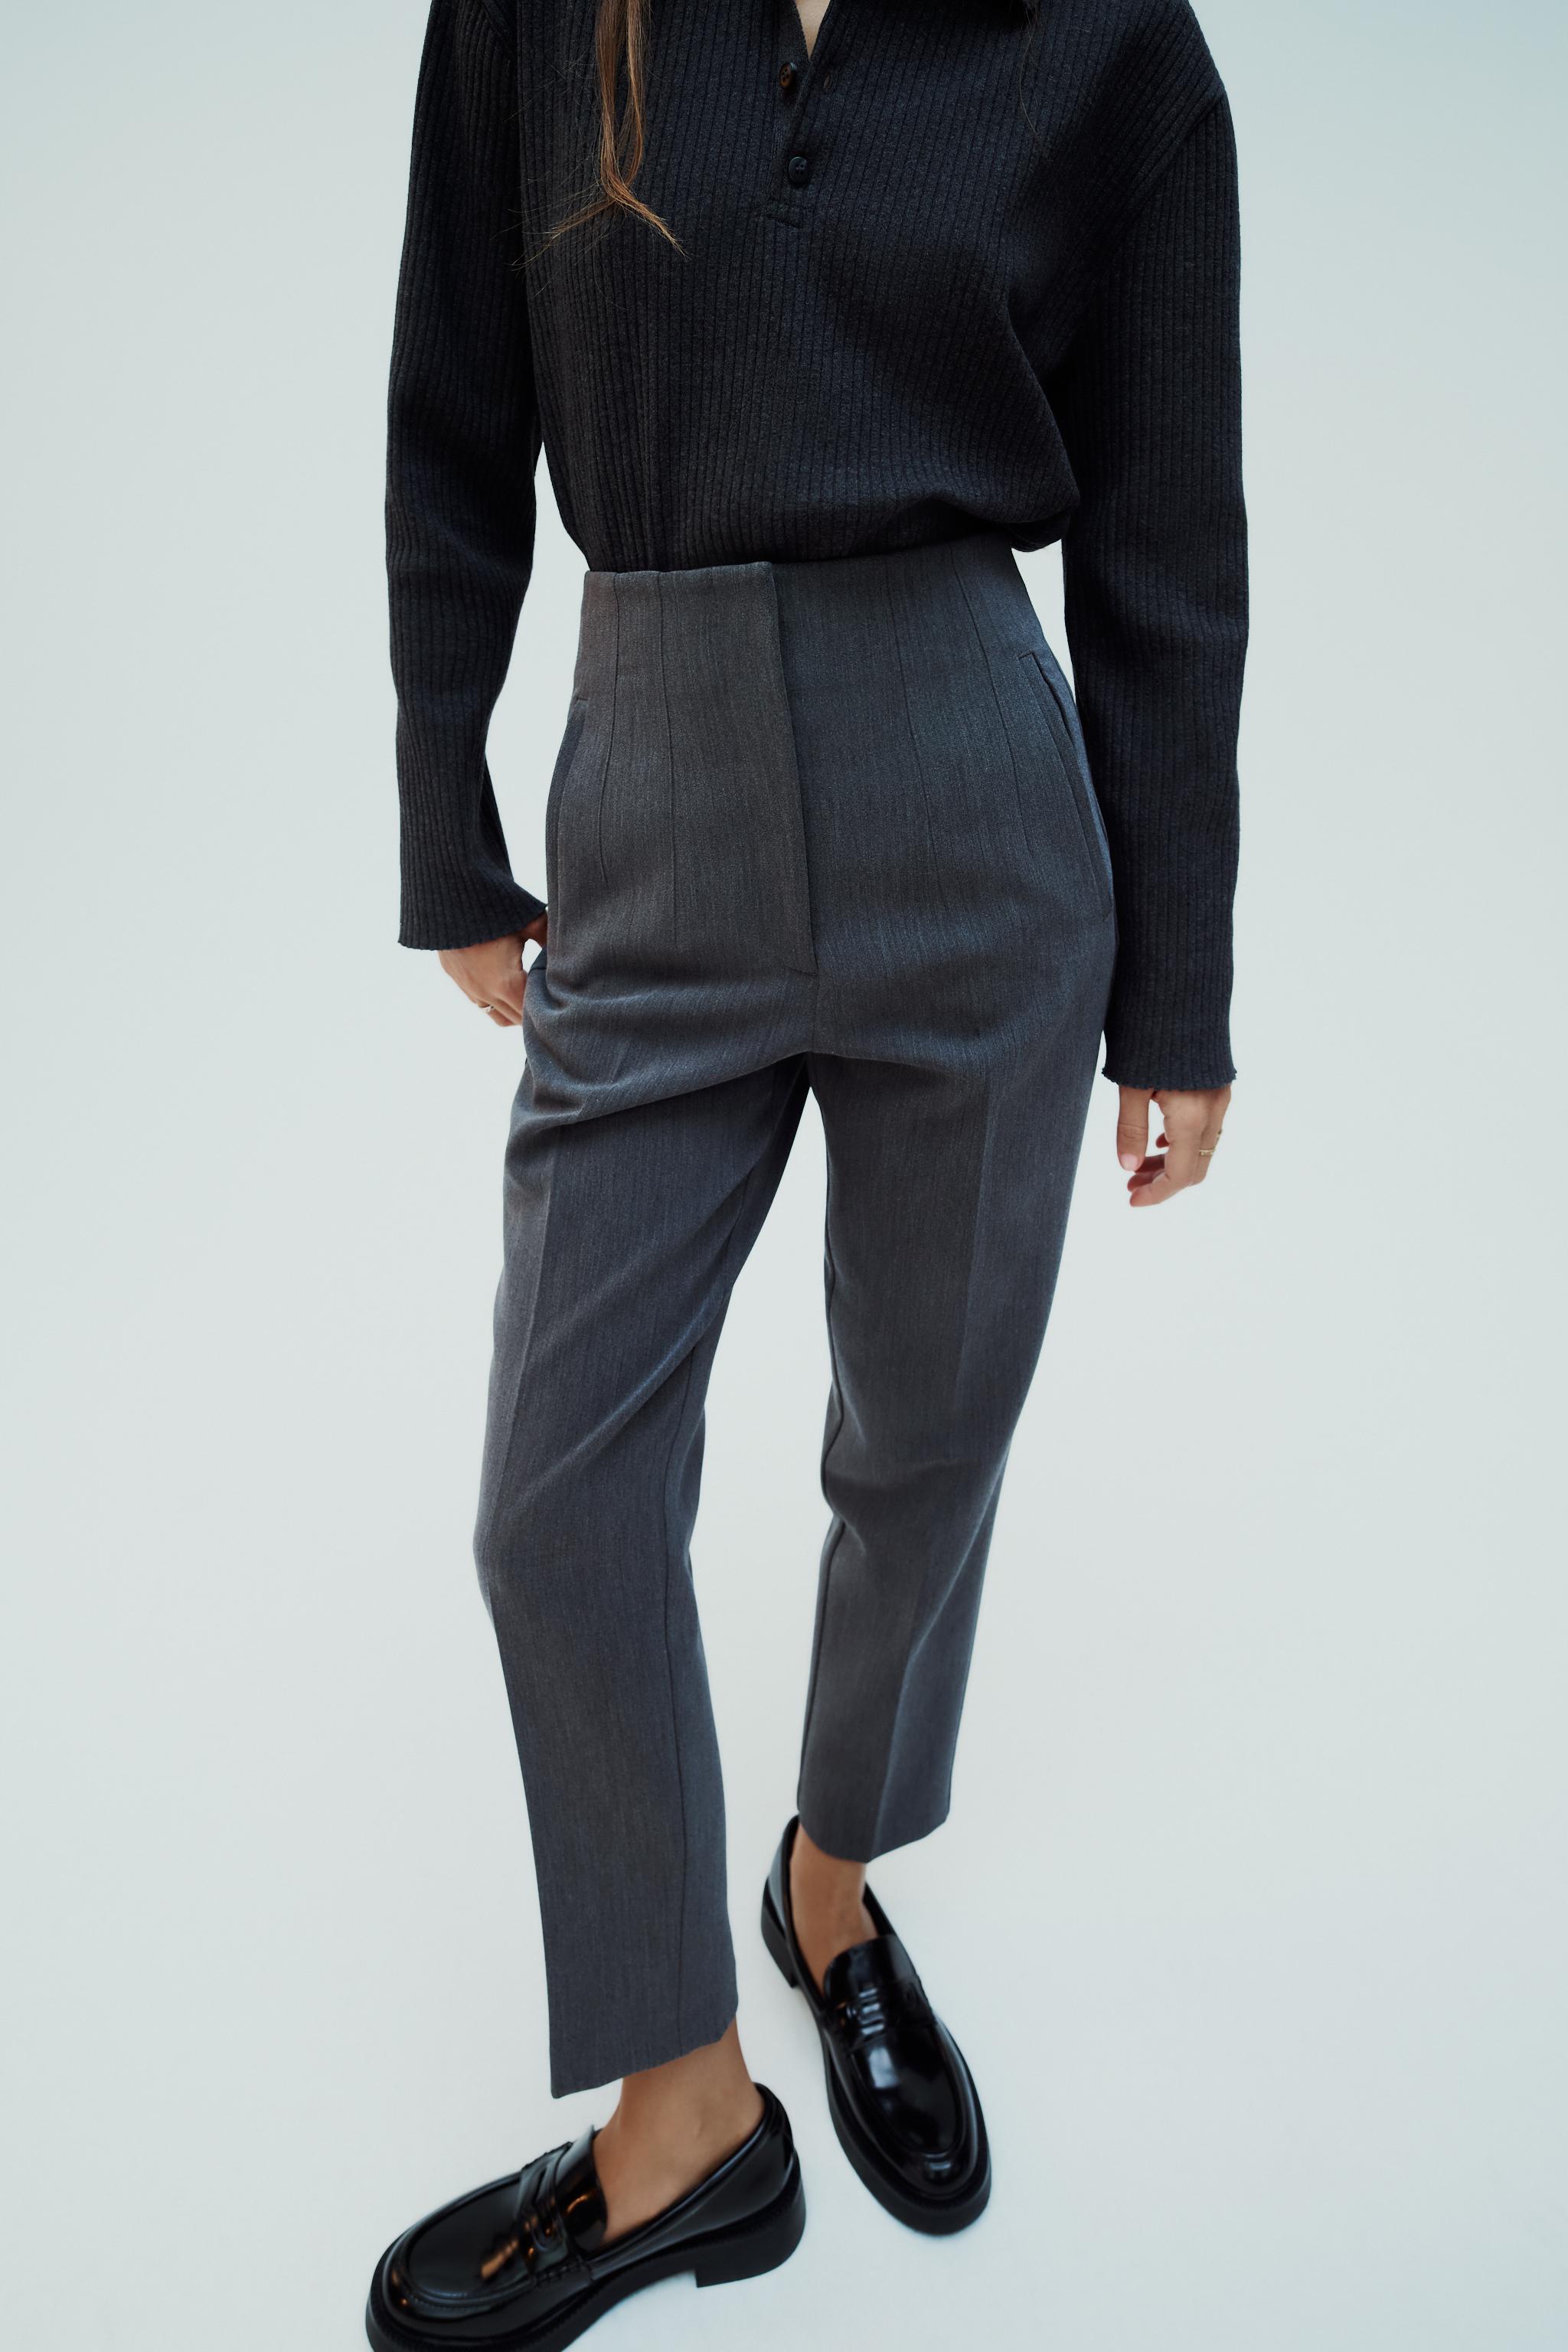 NWT Original Zara High-Waist Belted Pants, Women's Fashion